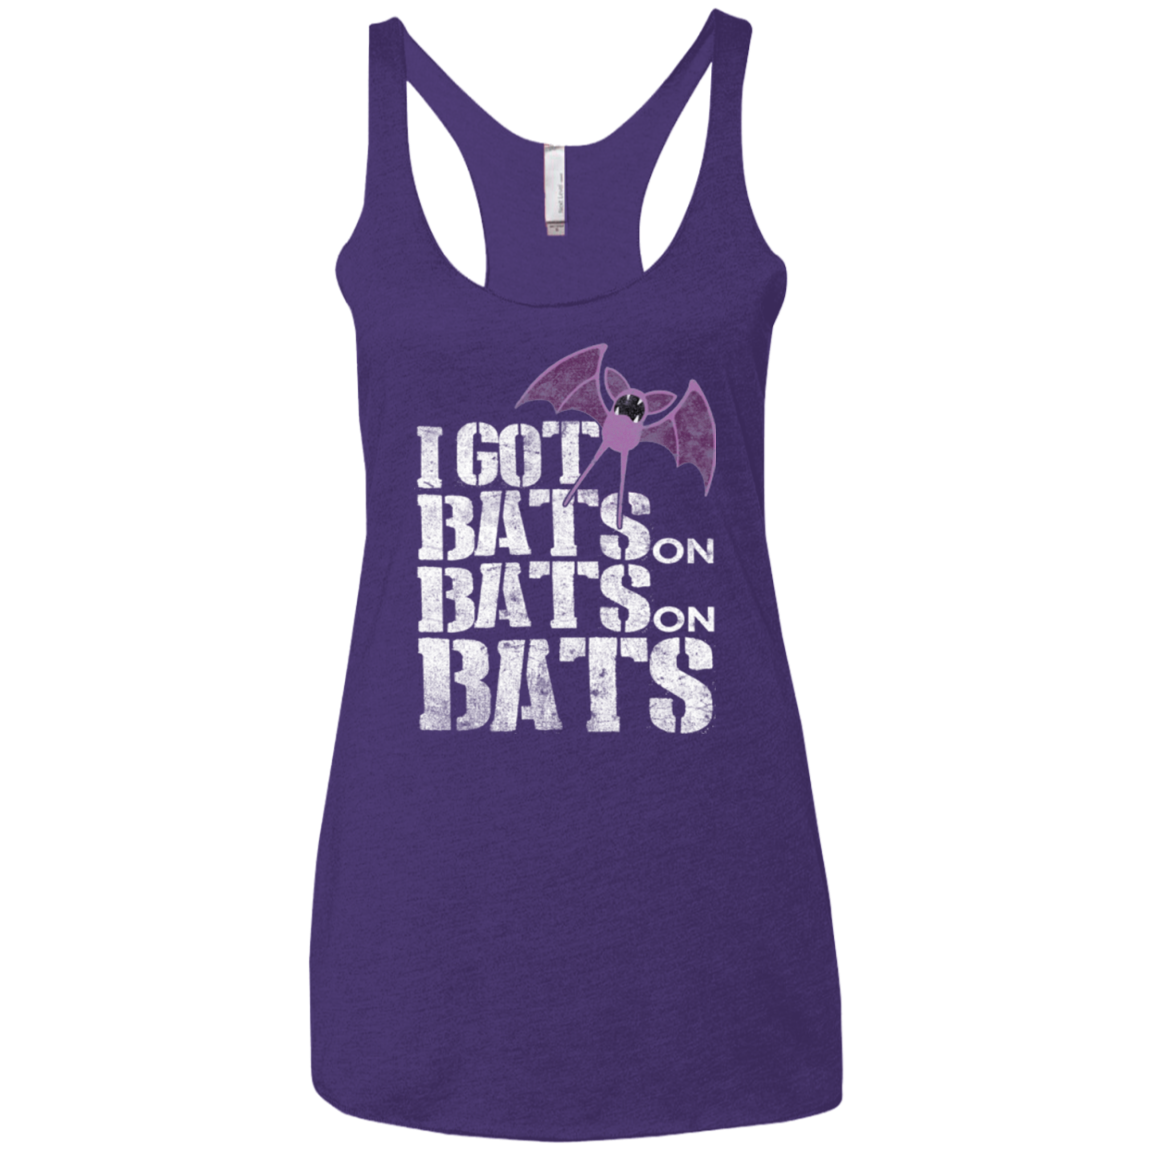 Bats on Bats on Bats Women's Triblend Racerback Tank